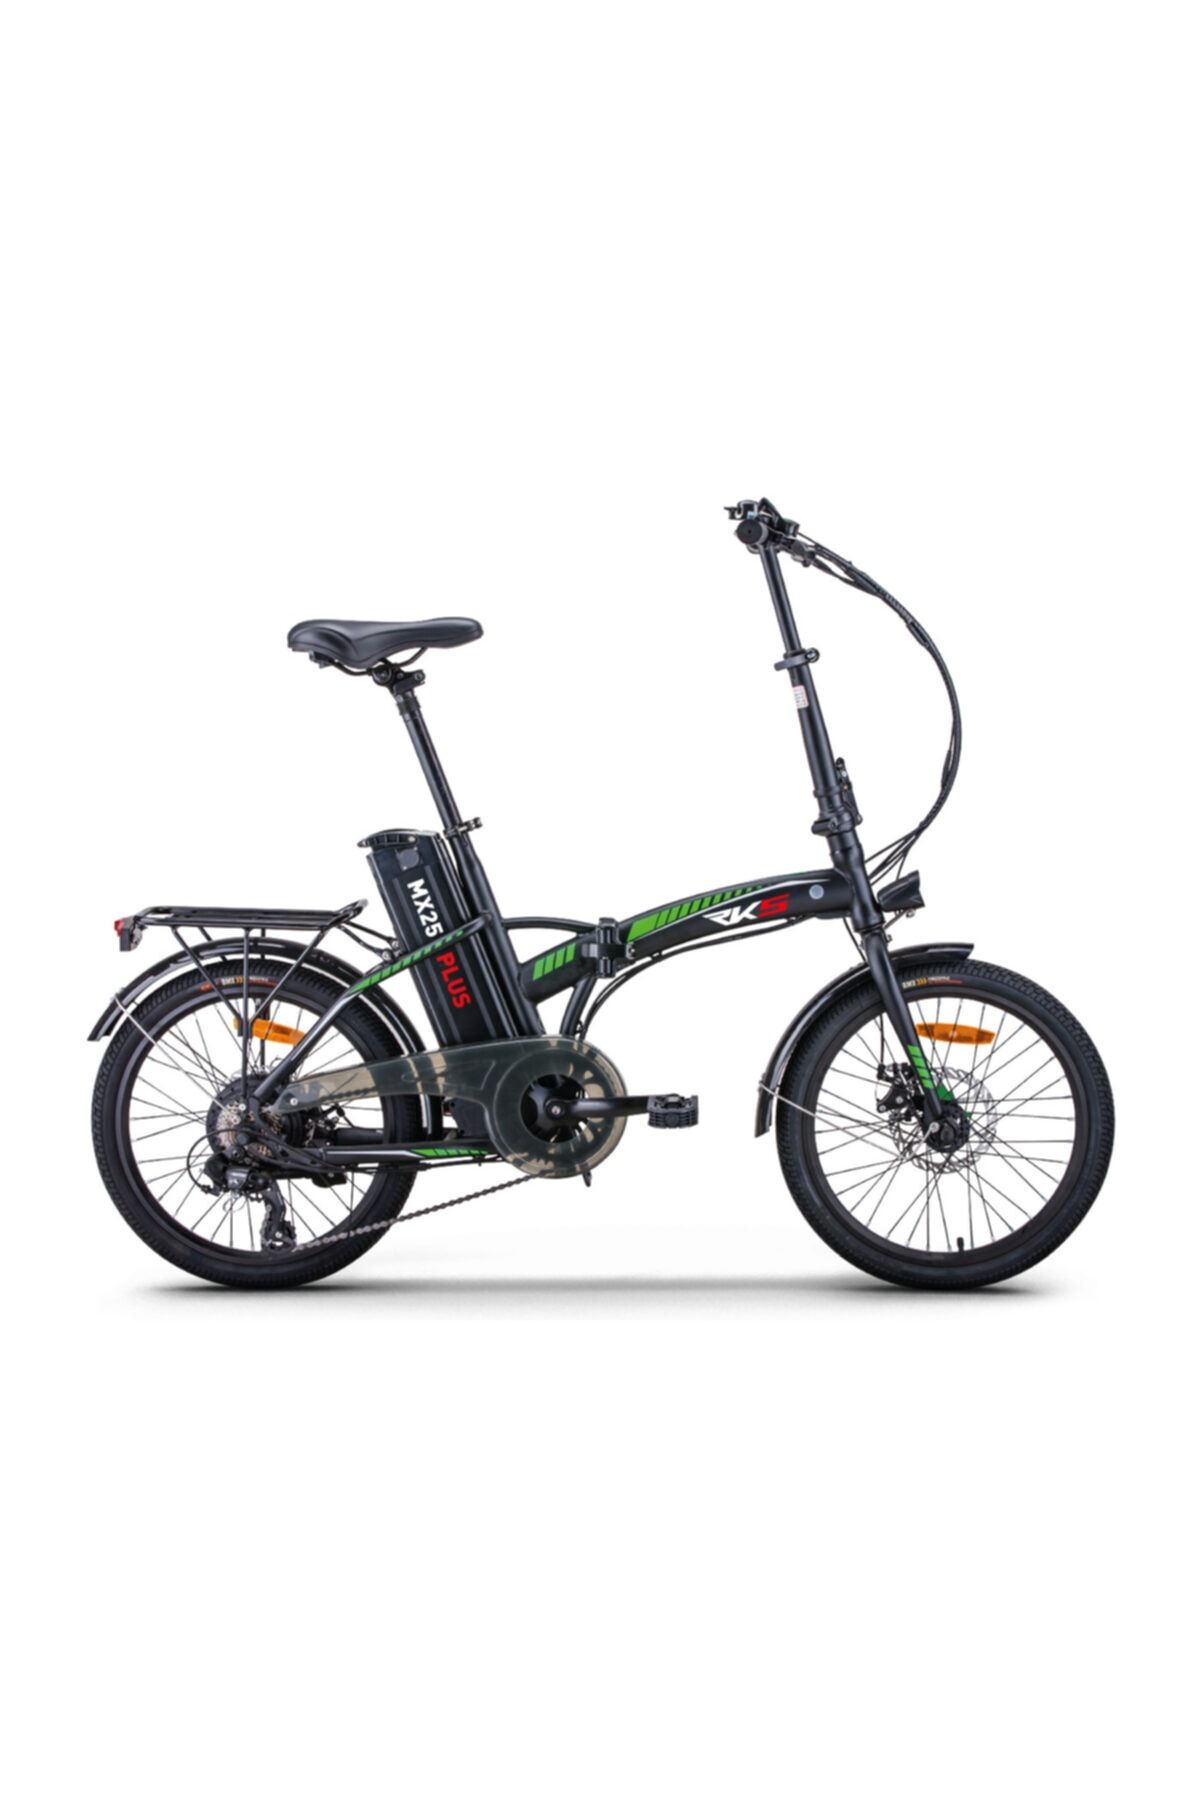 RKS Mx25 Plus Katlanır Elektrikli Bisiklet 250w Motor 35-40 km Menzil Şık Tasarım